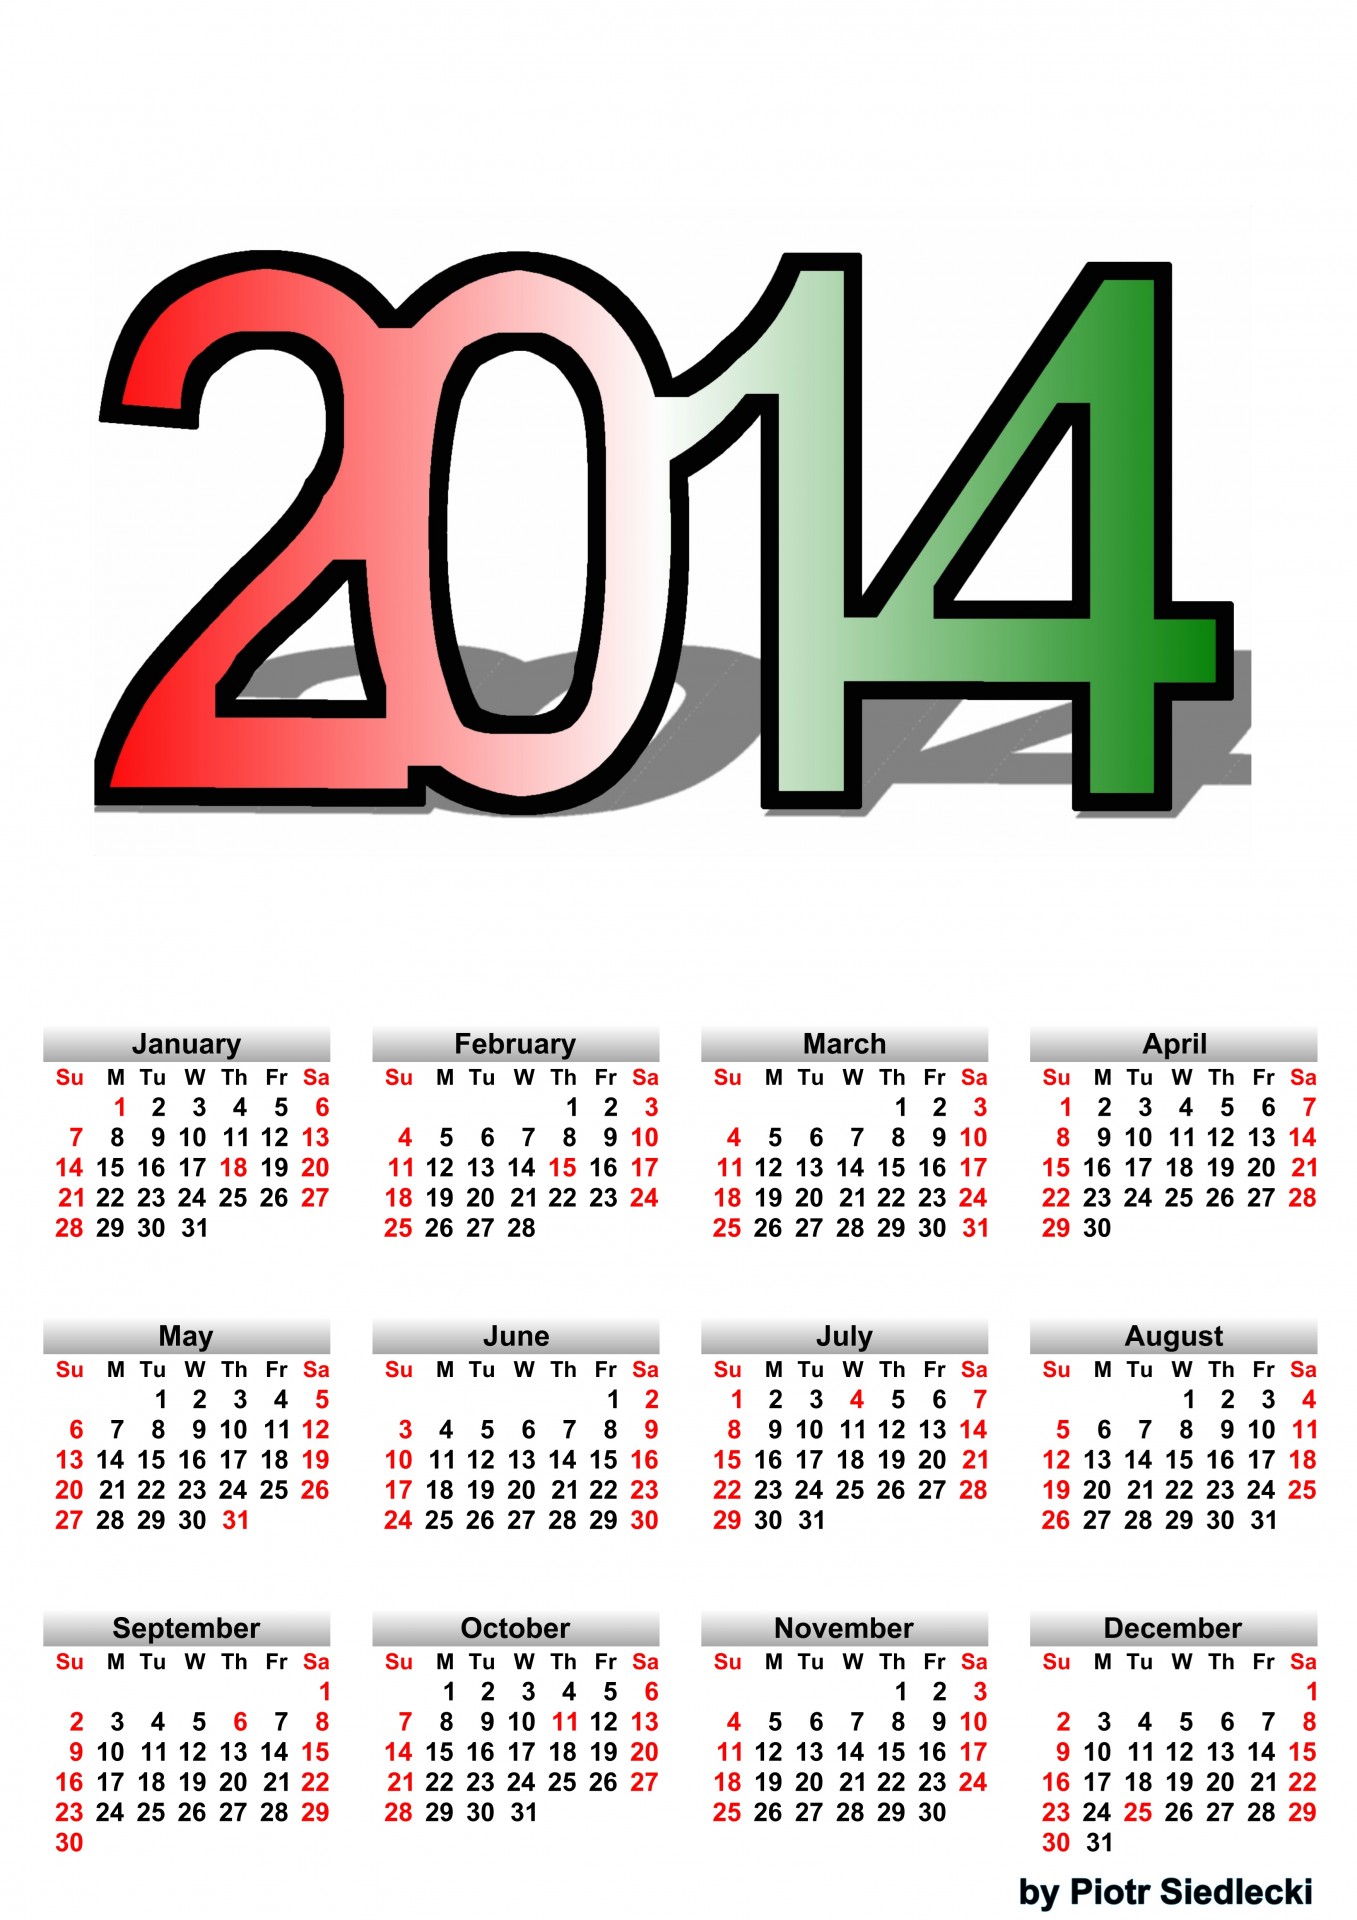 2014 Calendar 7 Free Stock Photo - Public Domain Pictures